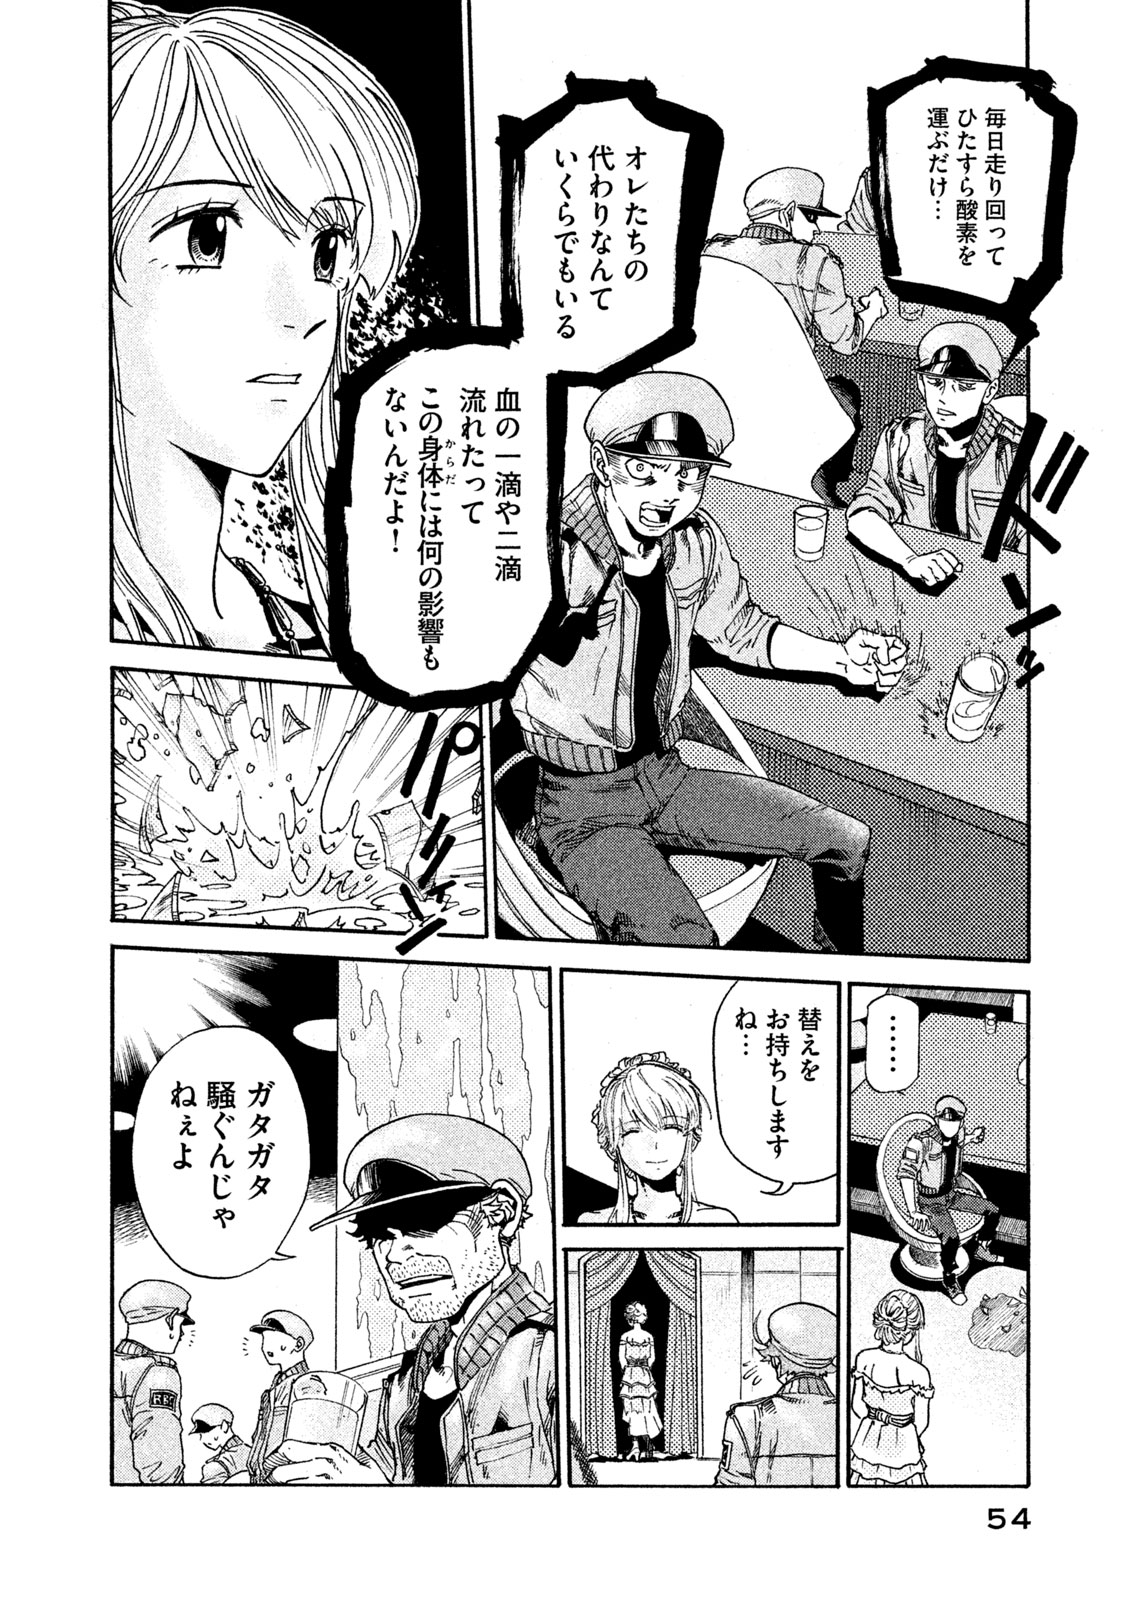 Hataraku Saibou BLACK - Chapter 2 - Page 18